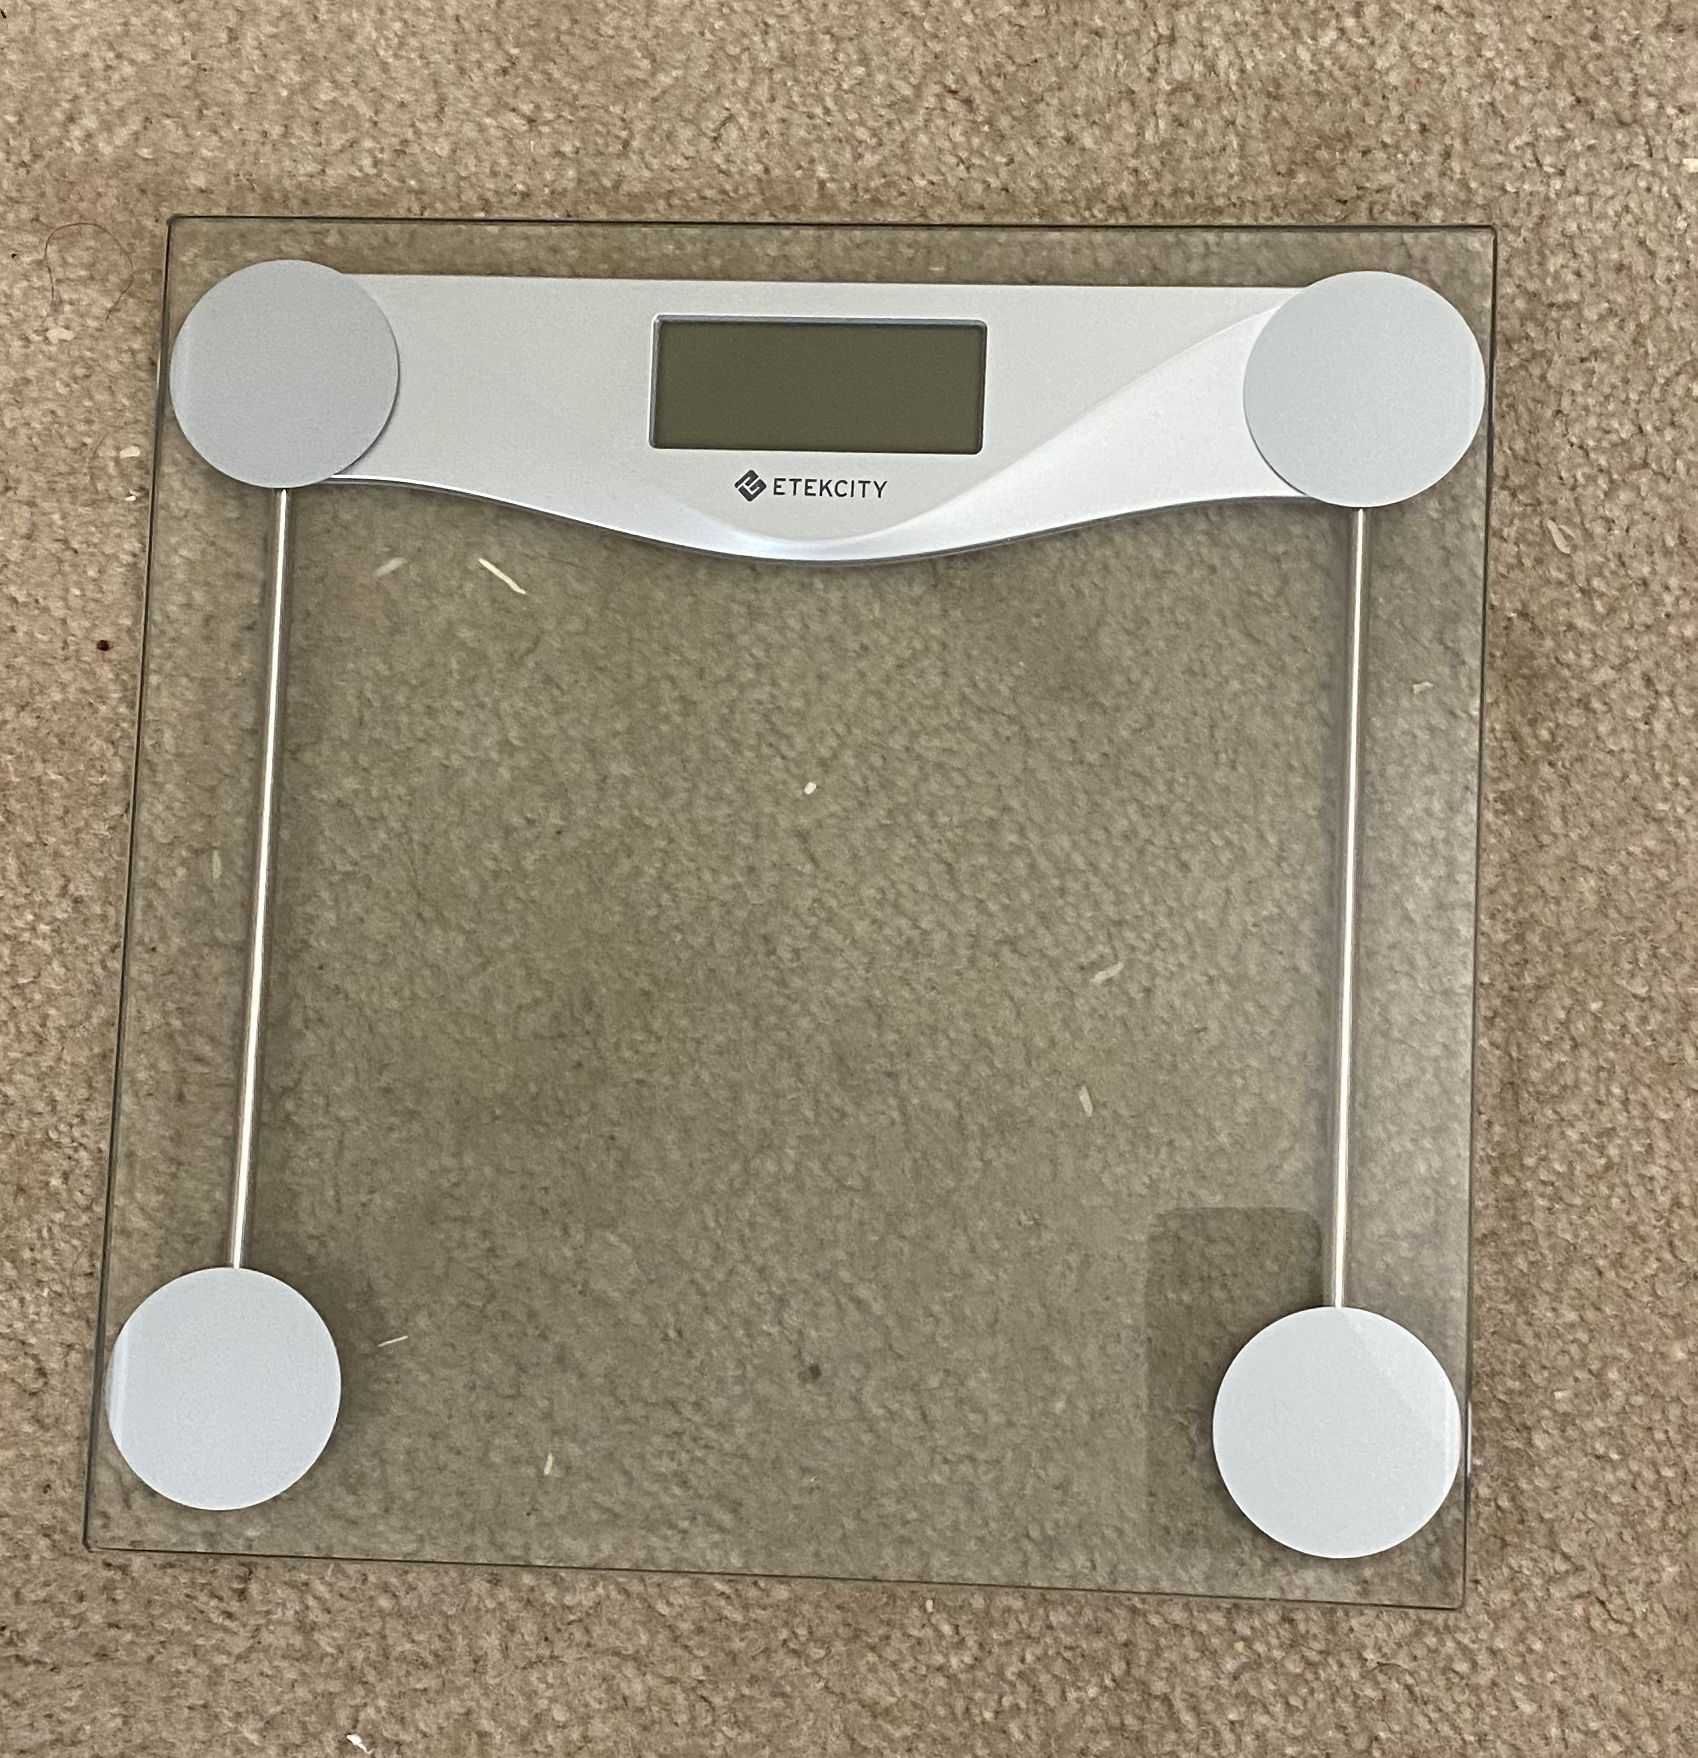 Etekcity glass weight scale